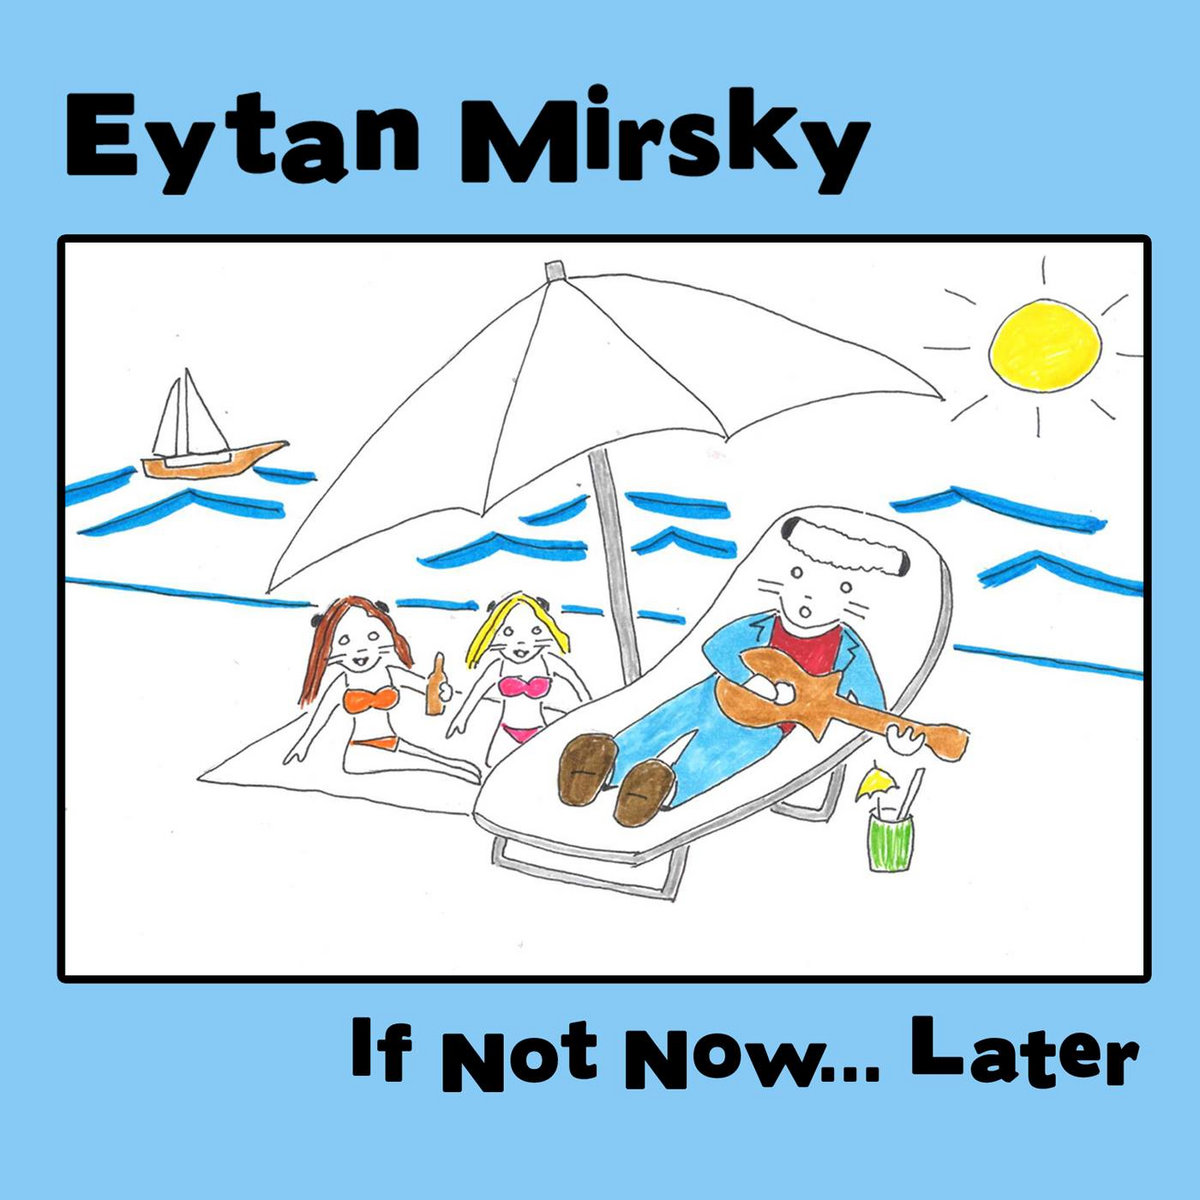 Eytan Mirsky